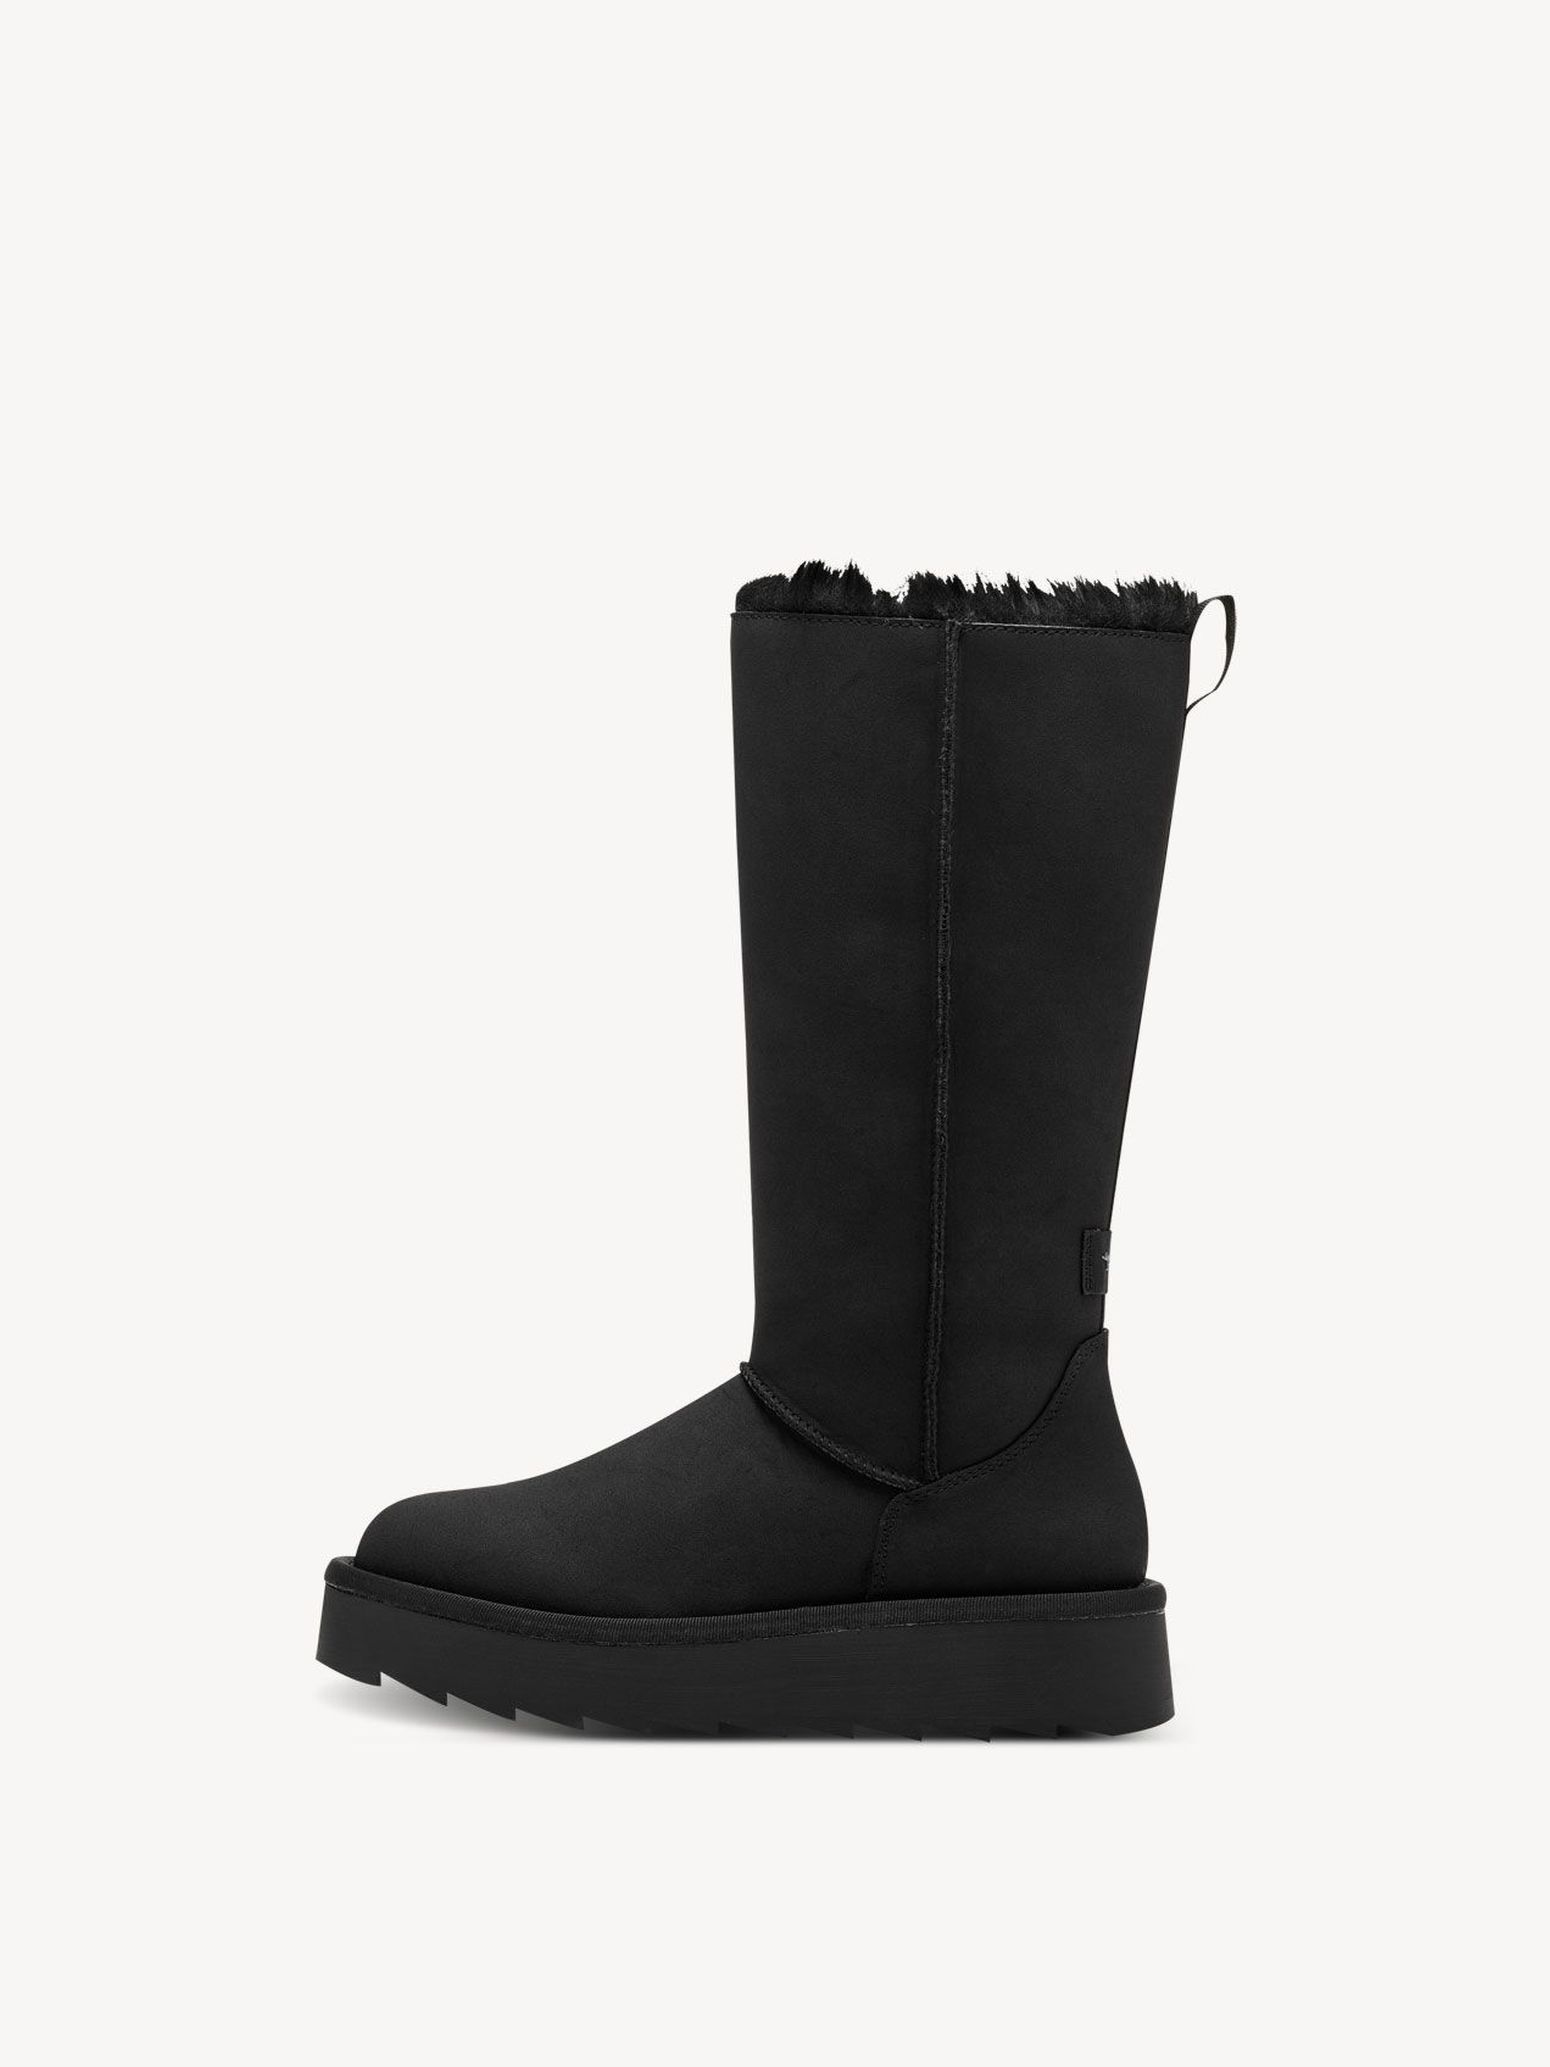 Boots - black warm lining